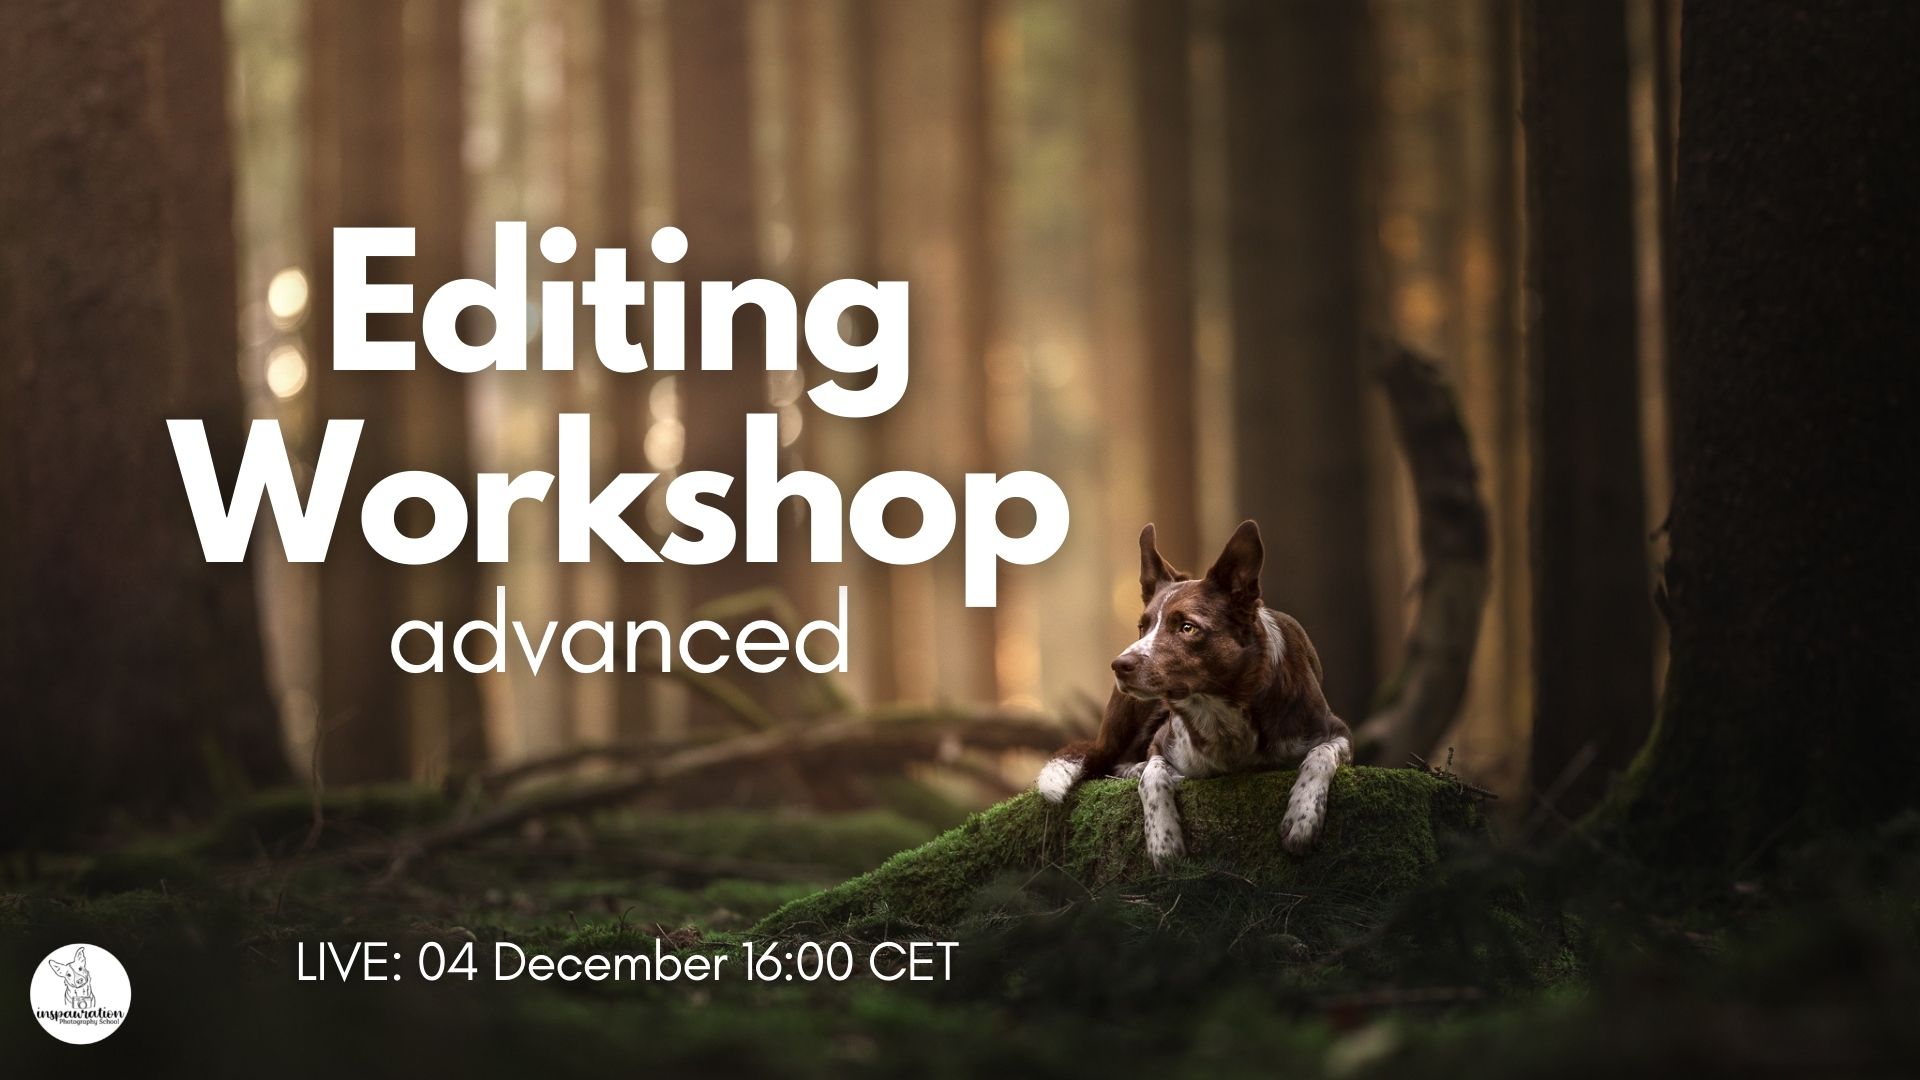 Advanced Editing Workshop